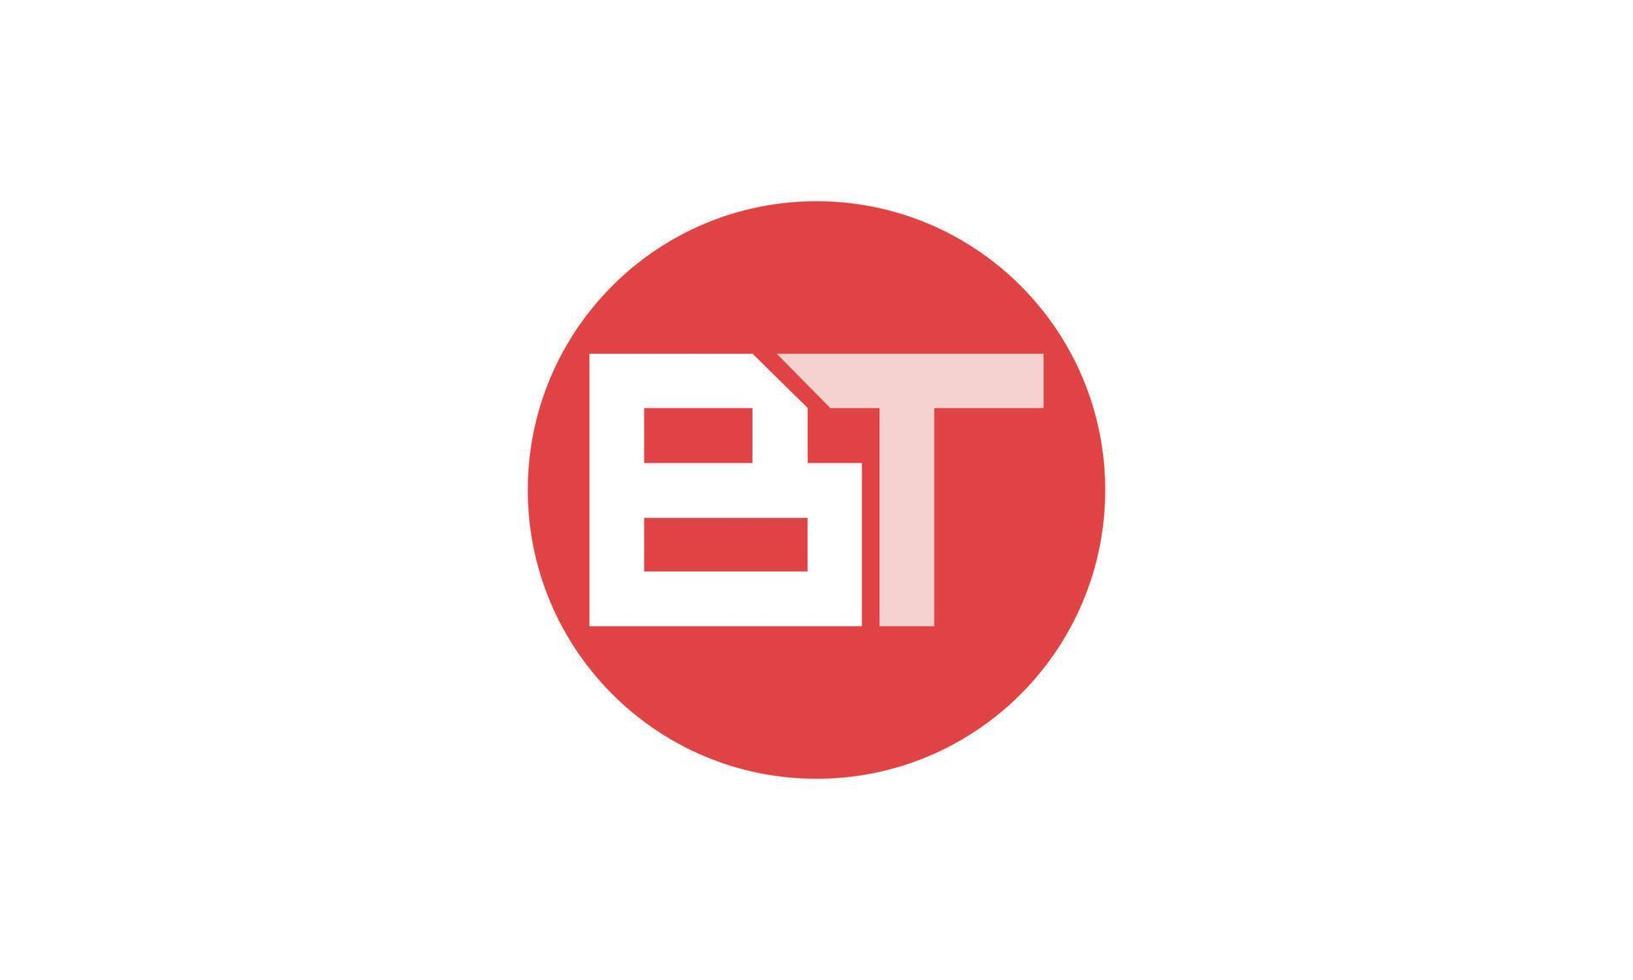 letras do alfabeto iniciais monograma logotipo bt, tb, b e t vetor